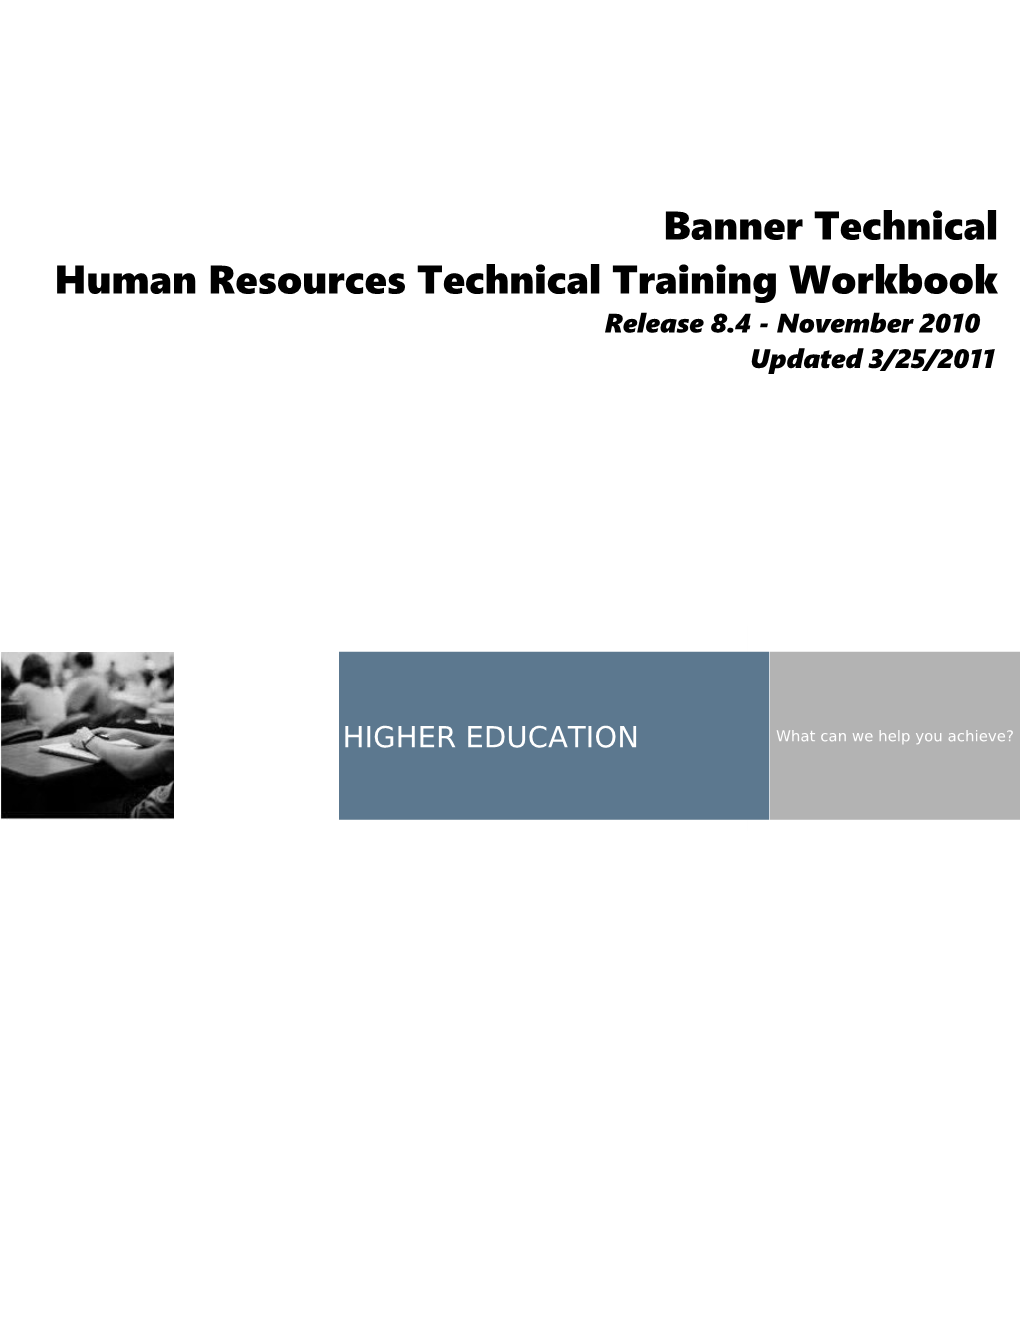 BT106 Human Resources Technical